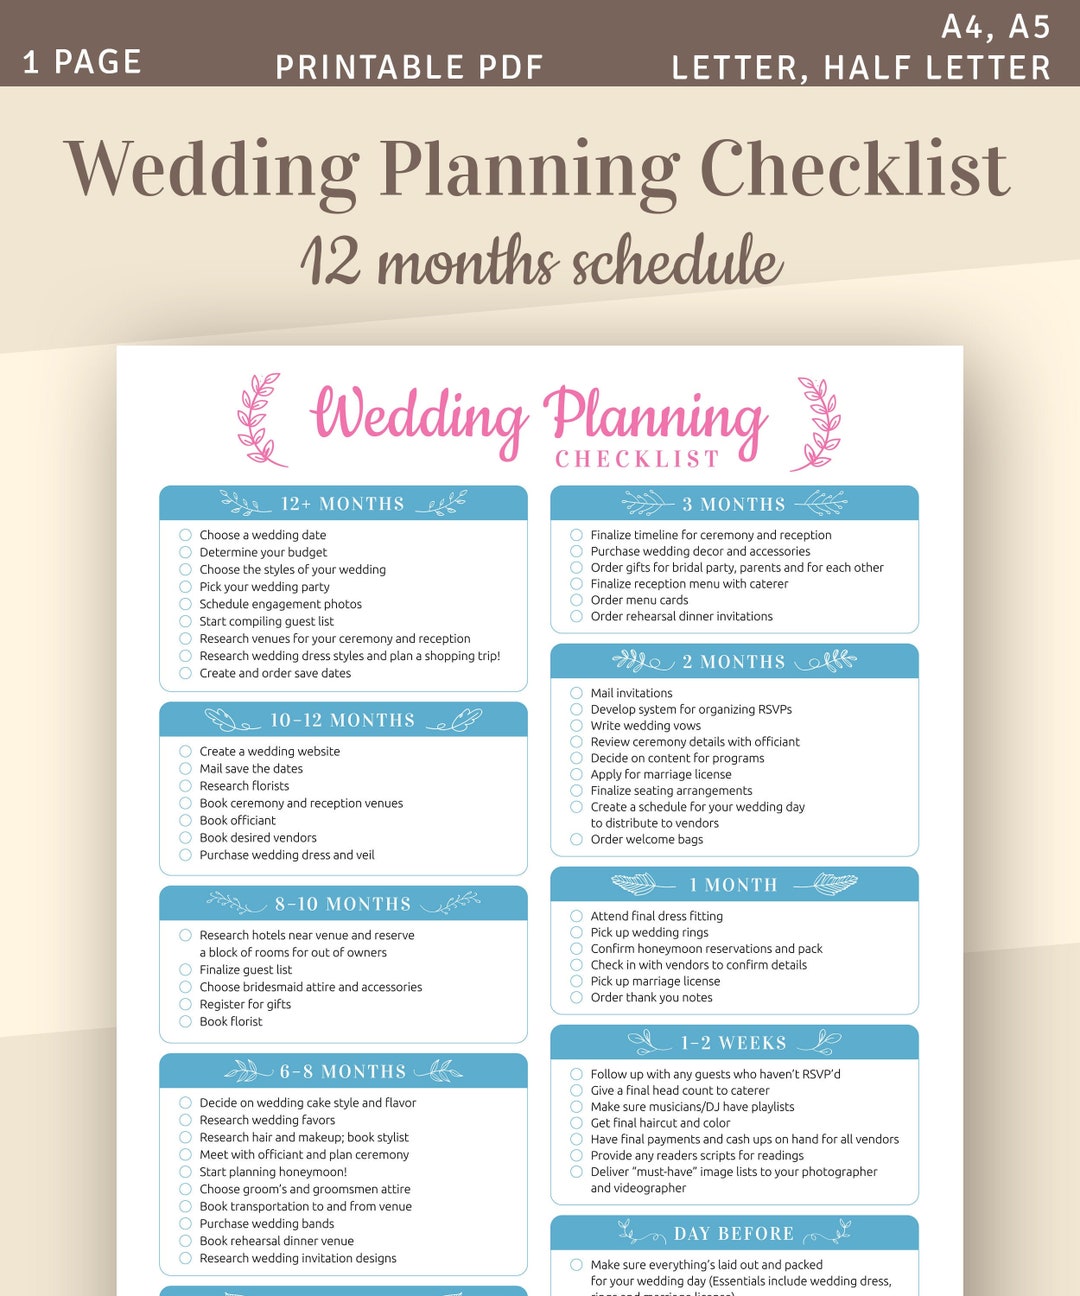 Wedding Planning Checklist Printable Wedding Template A4 - Etsy